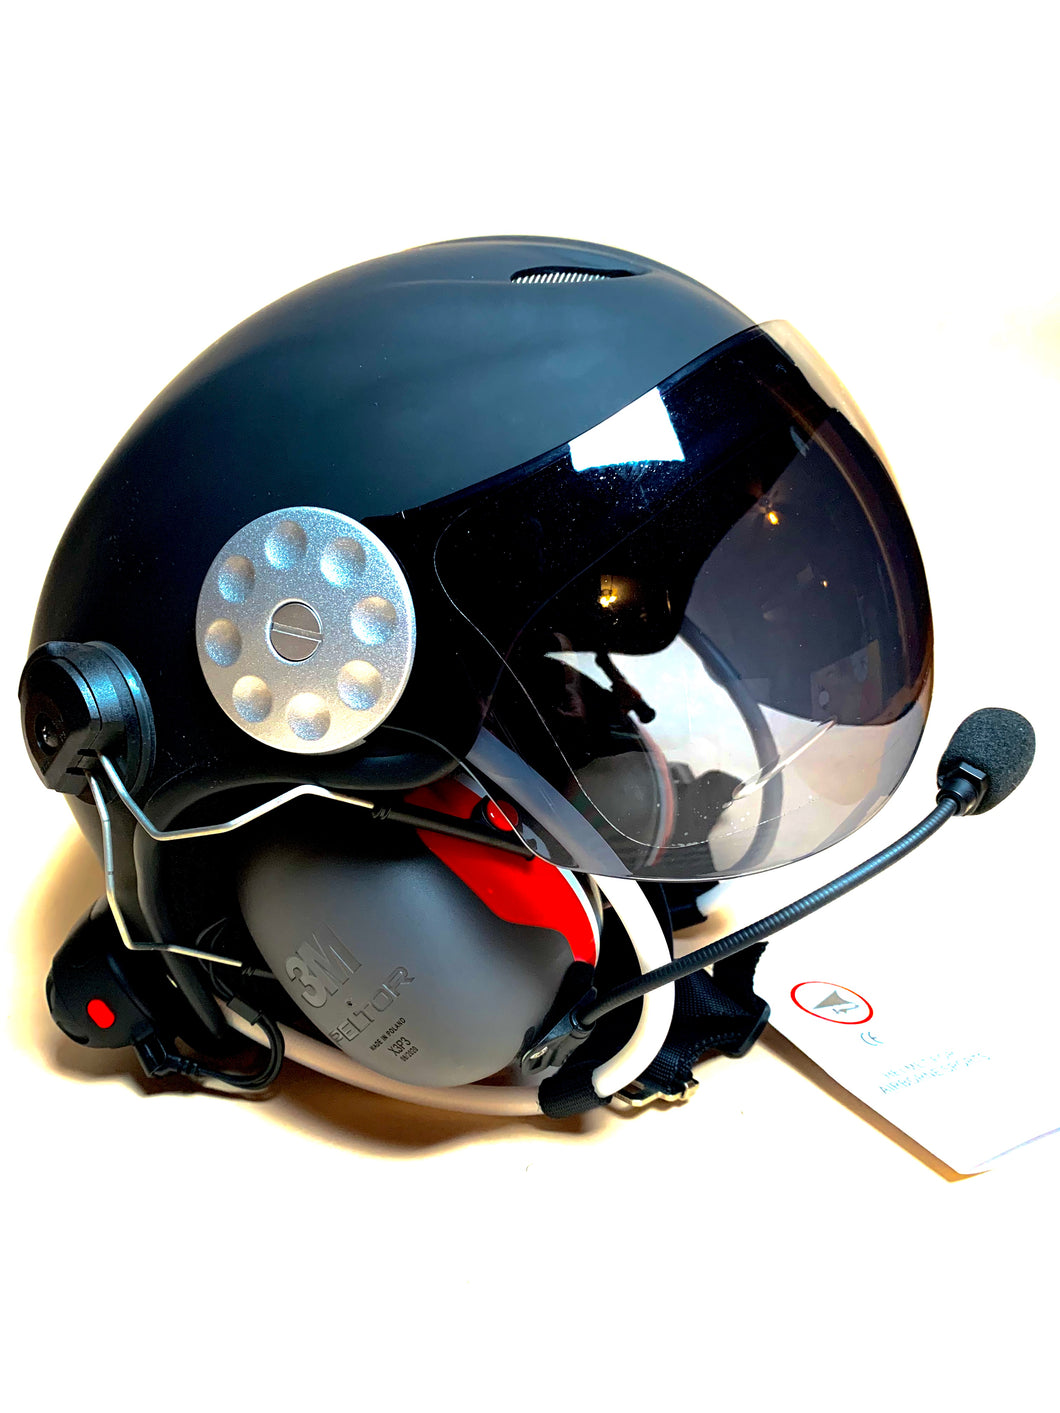 Air Extreme Helmet With Visor